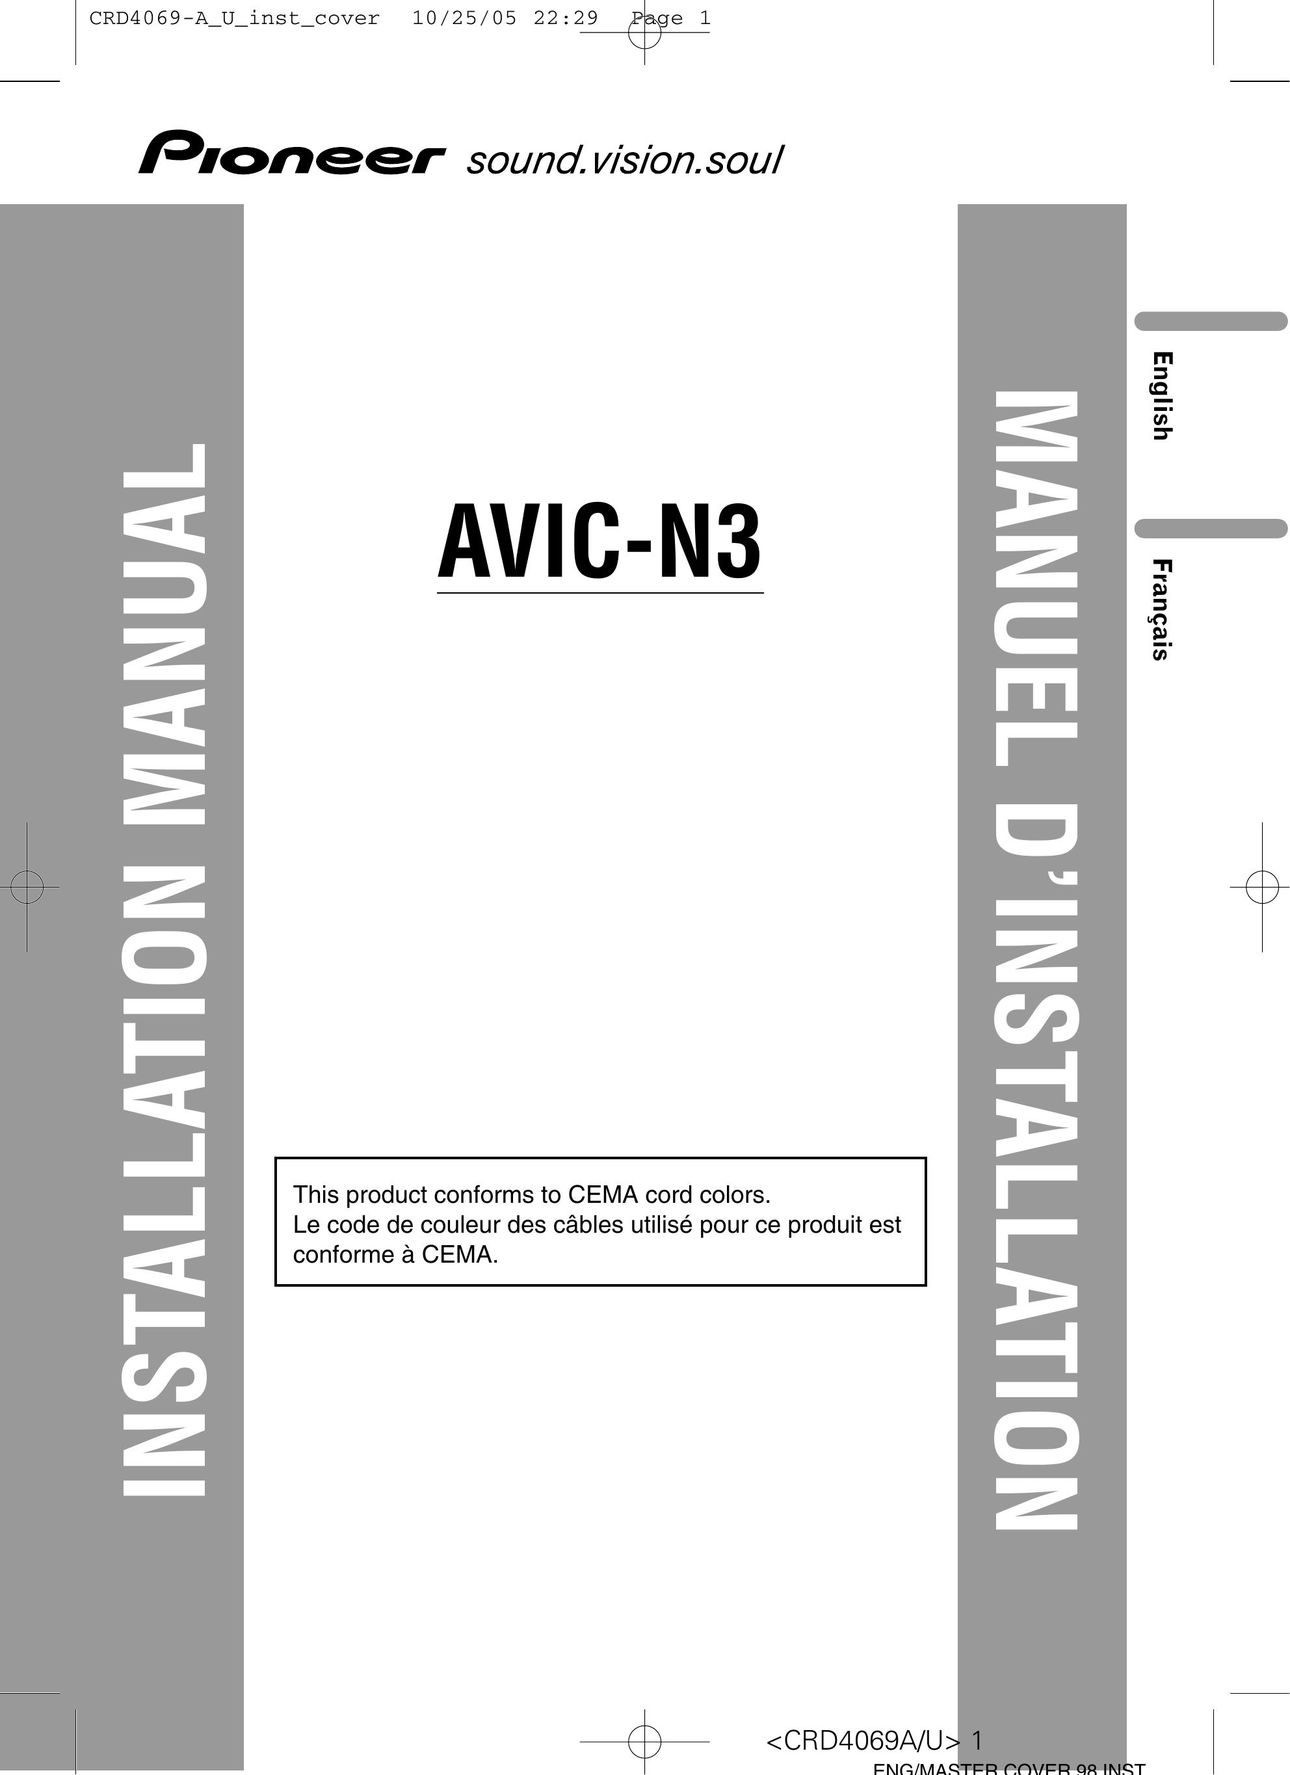 Pioneer AVIC-N3 Car Stereo System User Manual